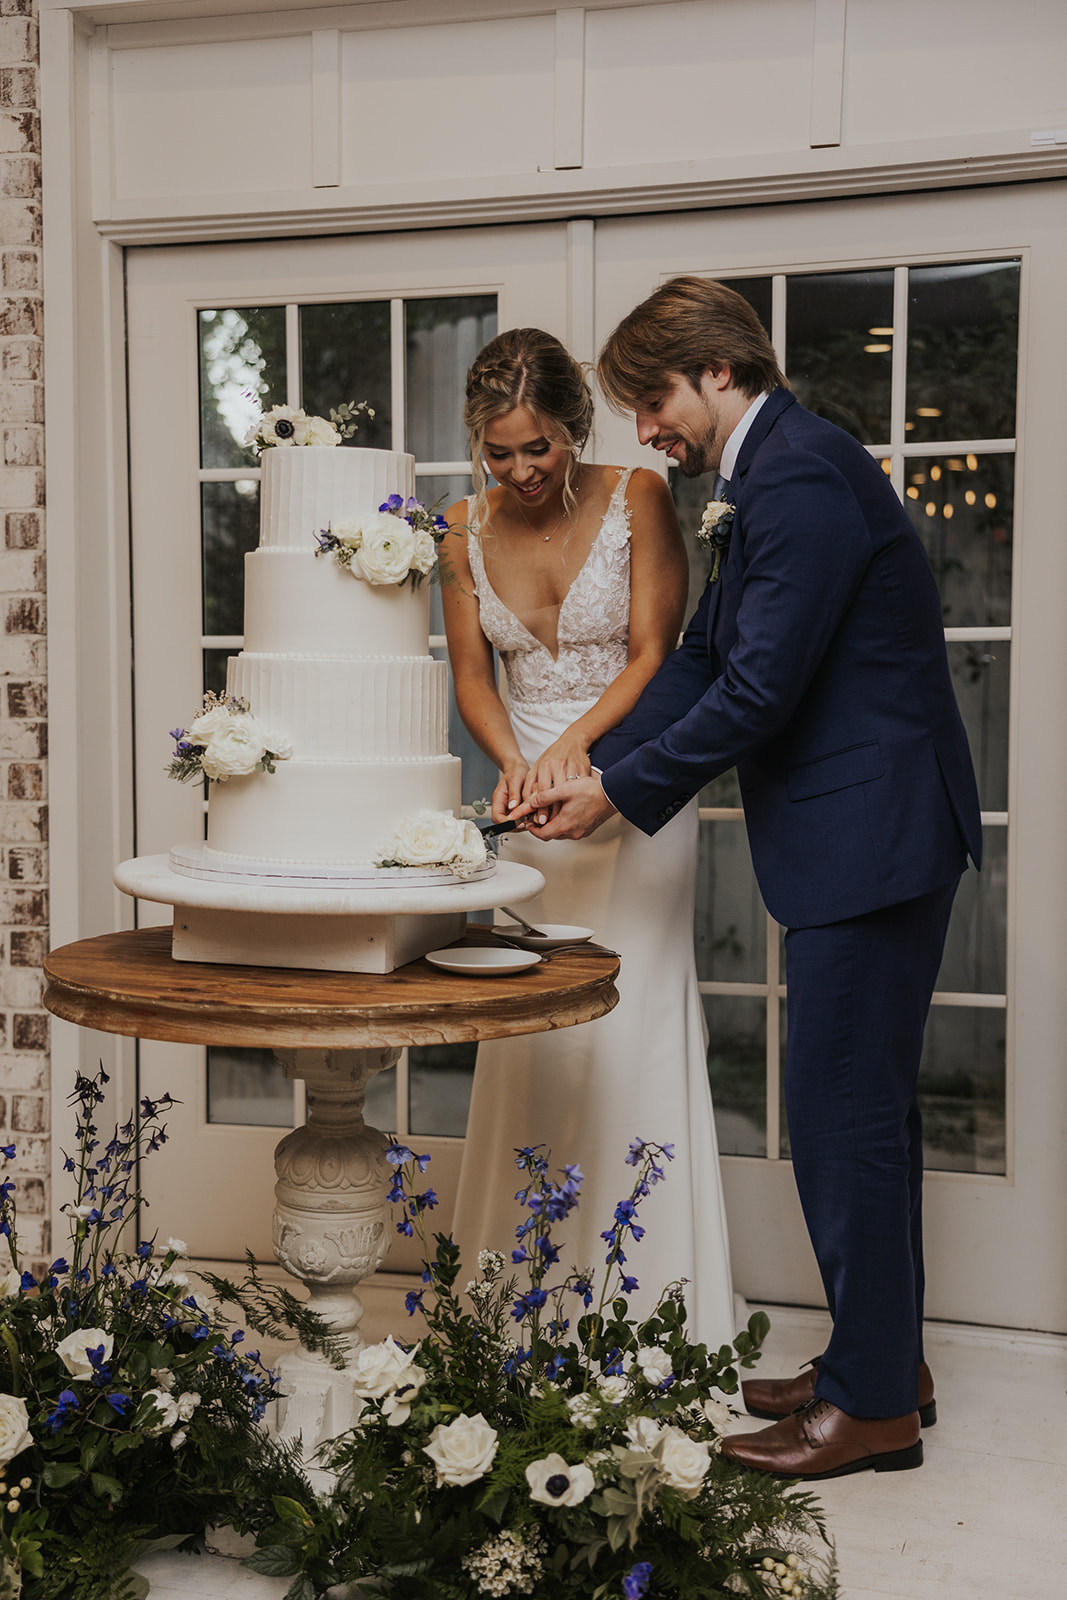 Beautiful bride and groom cut their cake at their dreamy Georgia wedding reception